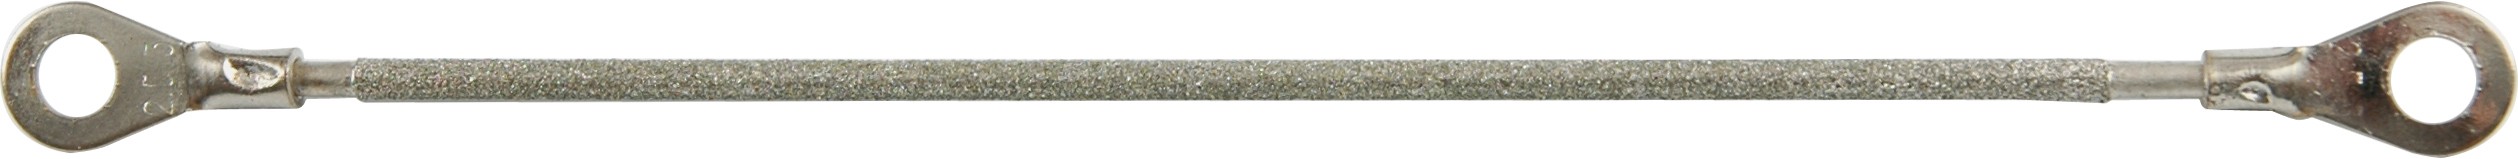 Lanko diamantové do pily 300 mm Vorel TO-27575